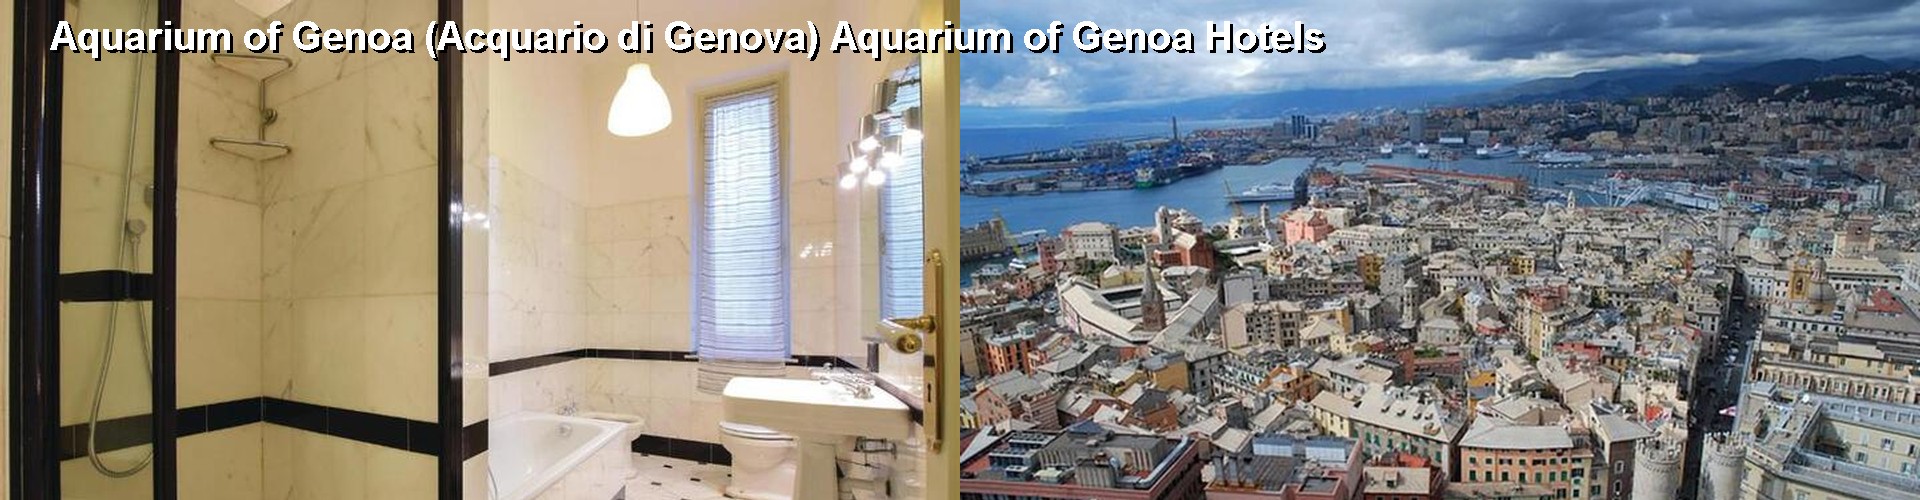 5 Best Hotels near Aquarium of Genoa (Acquario di Genova) Aquarium of Genoa